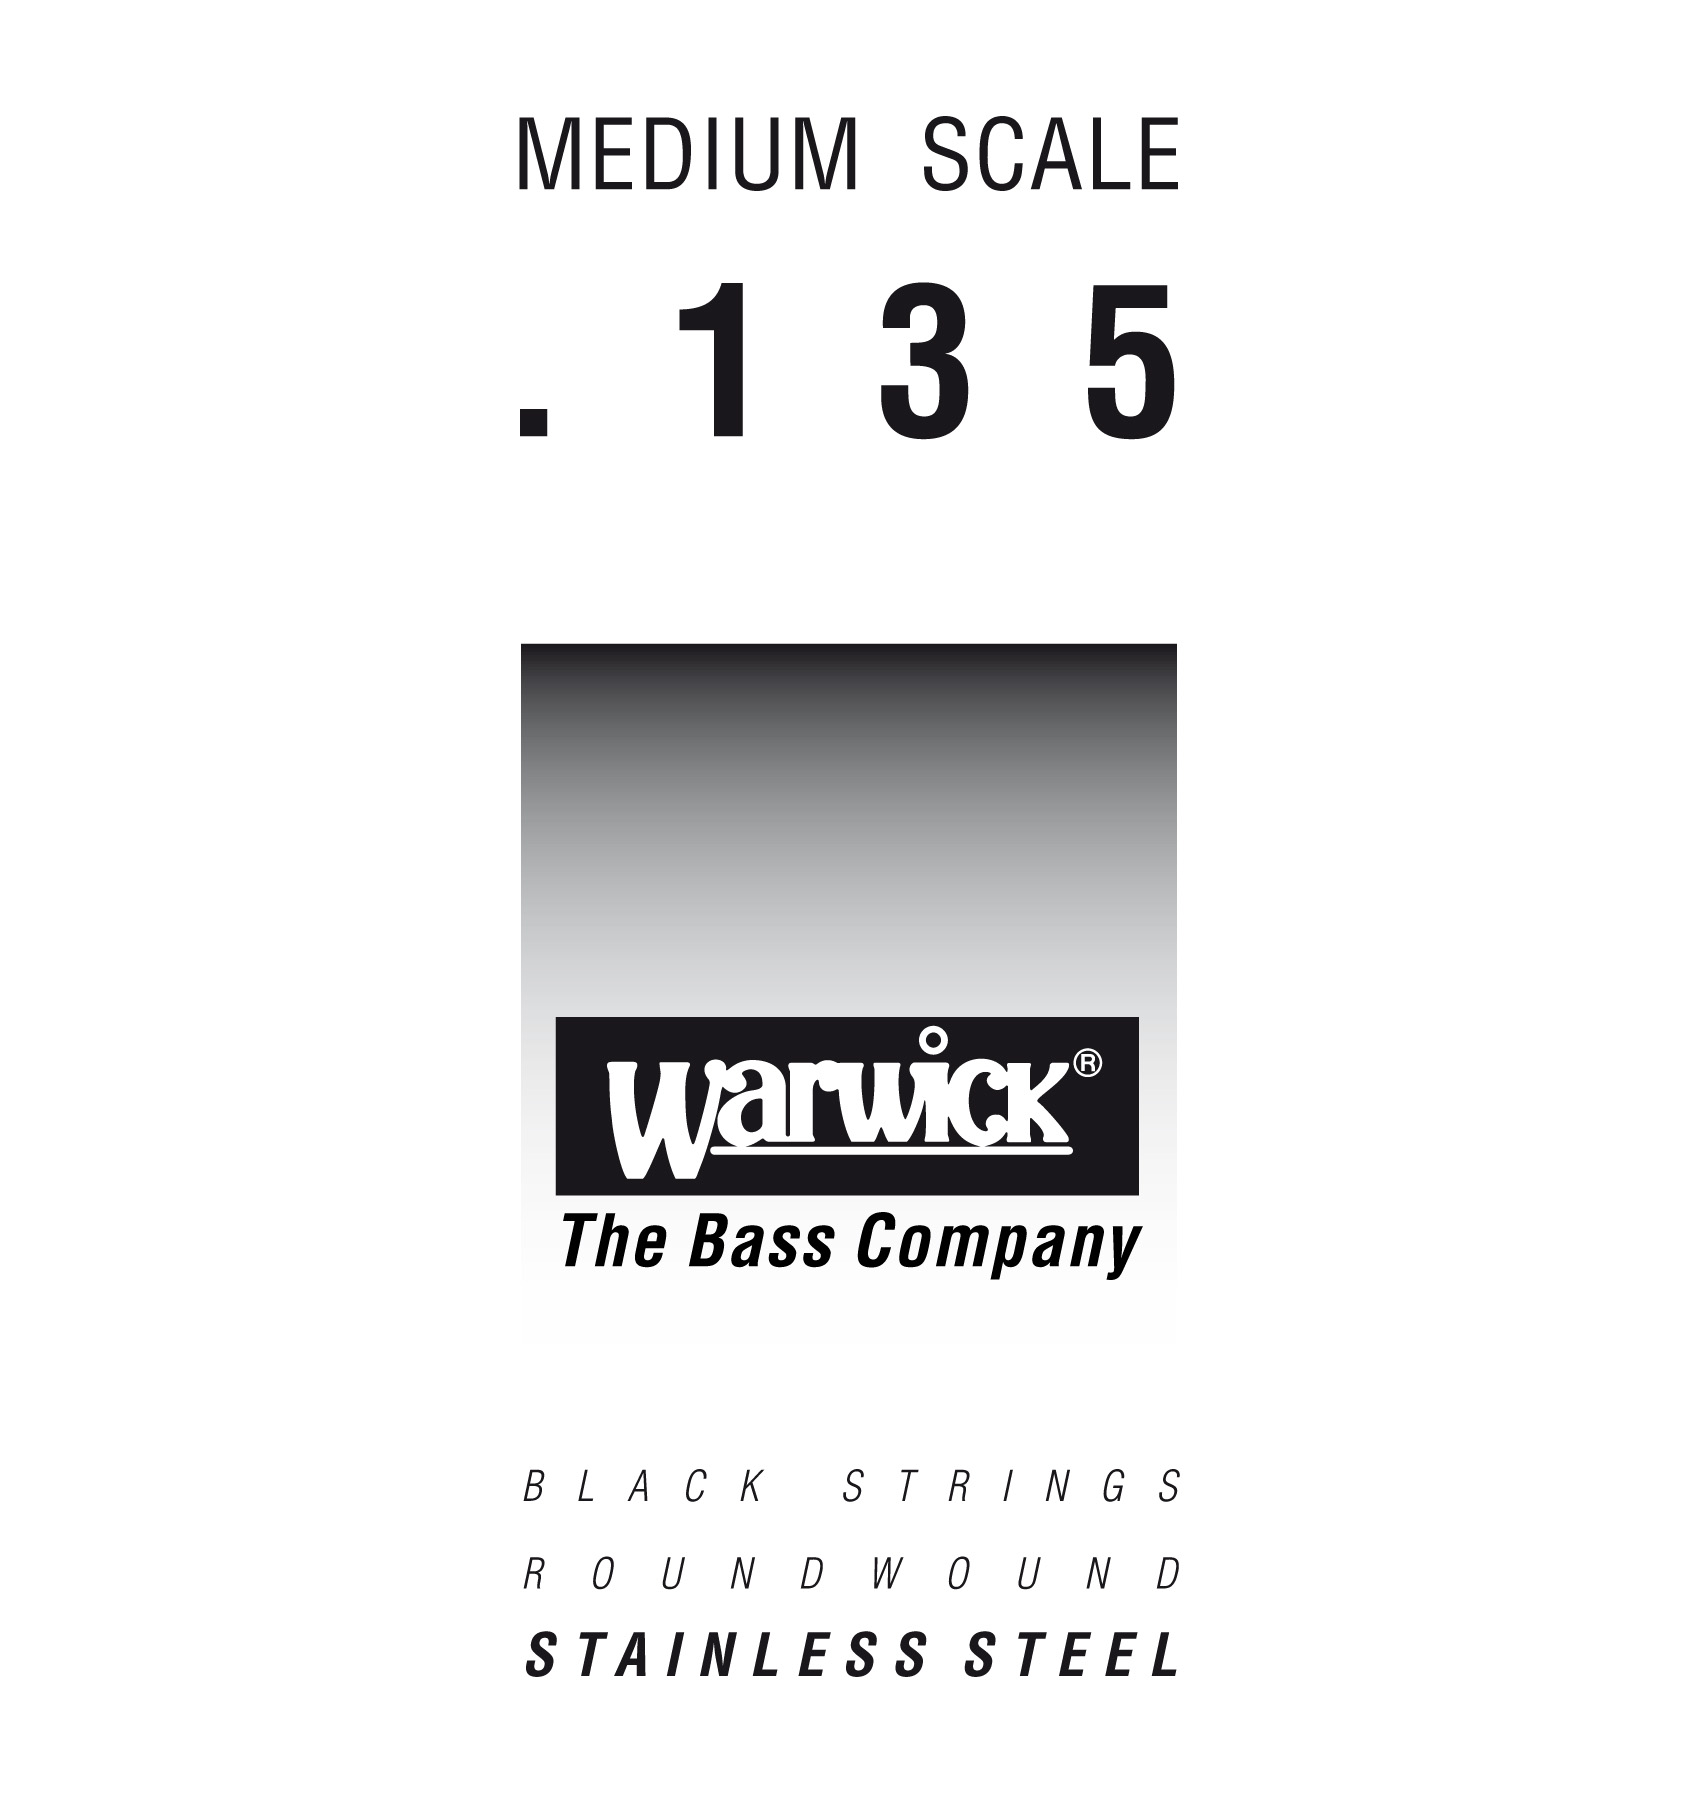 Warwick Black Label Bass Strings, Stainless Steel - Bass Single String, .135", Medium Scale